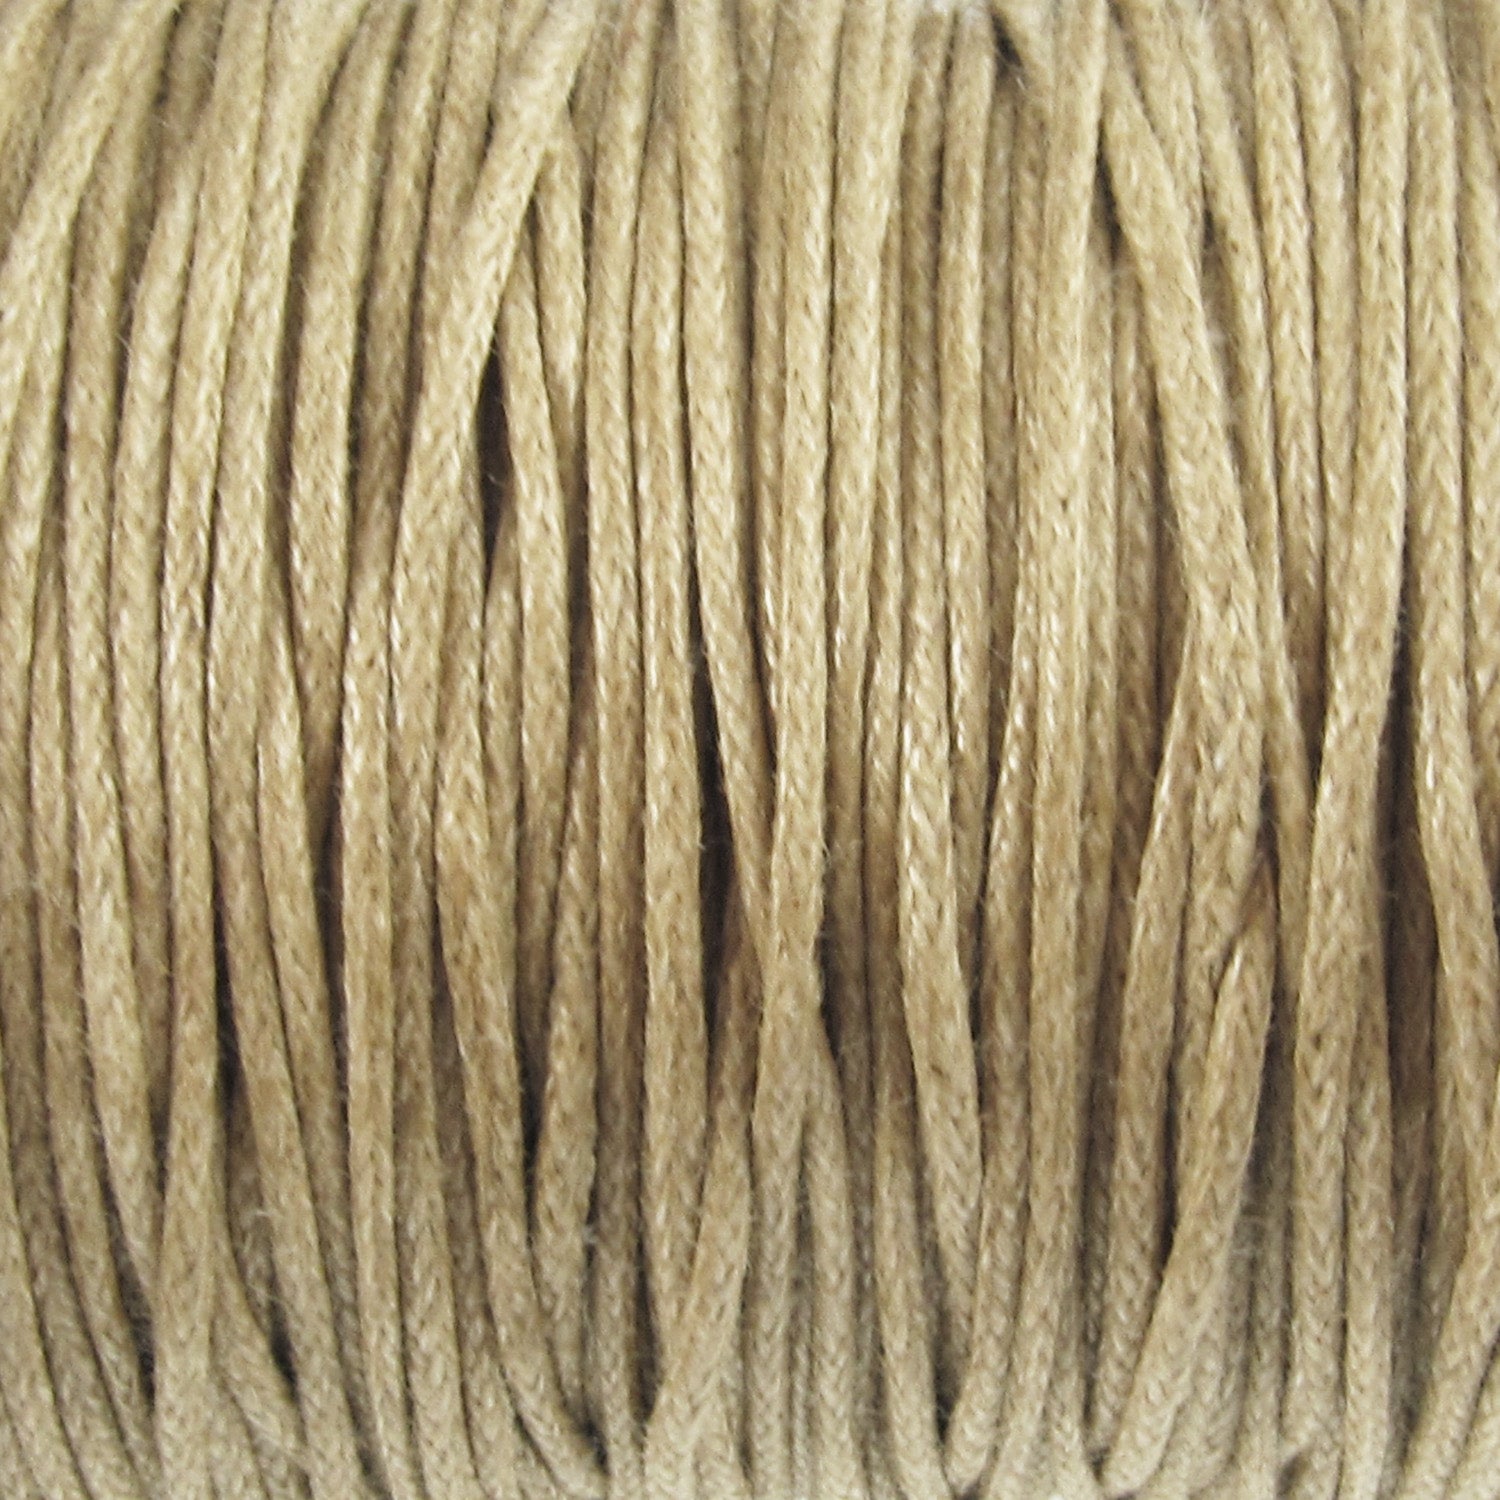 Tan Cotton Cording